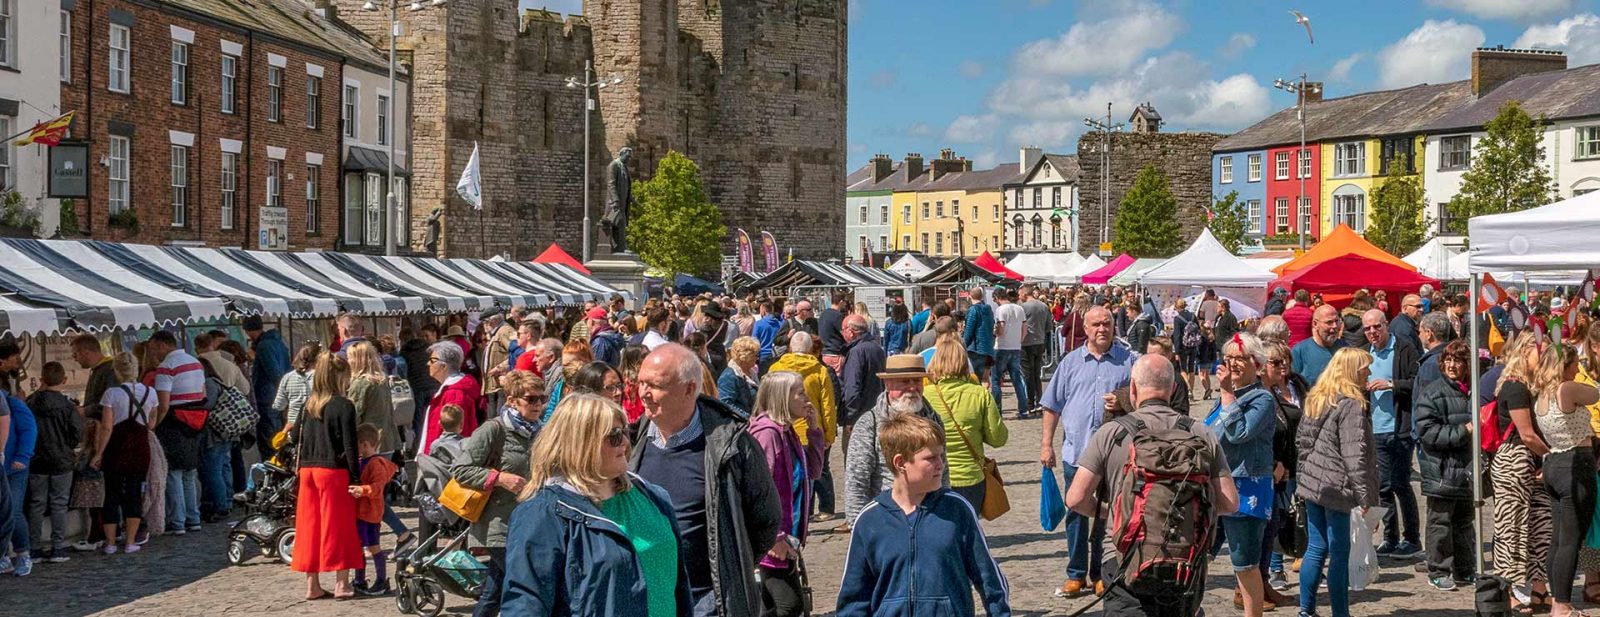 Caernarfon Food Festival this weekend!